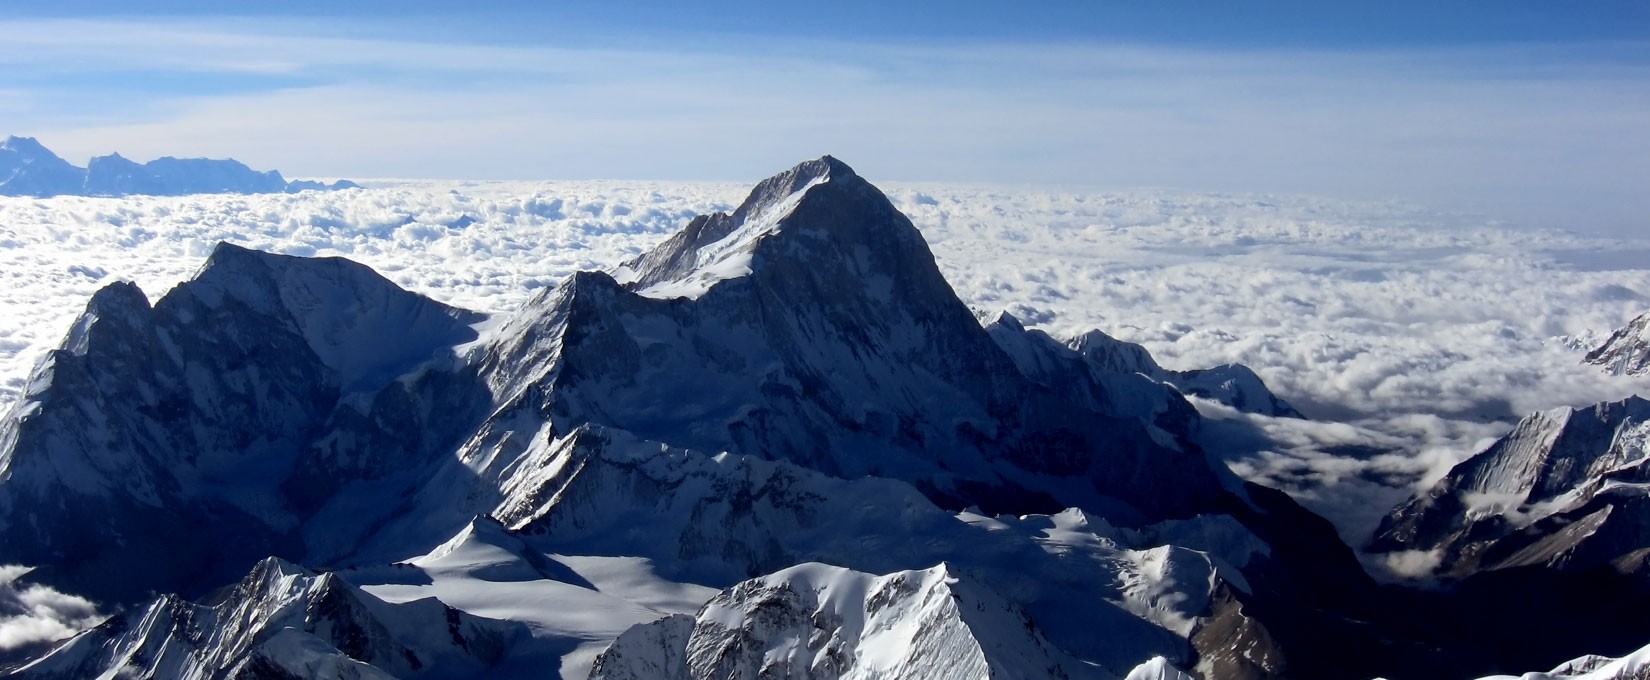 Himalayas Region 